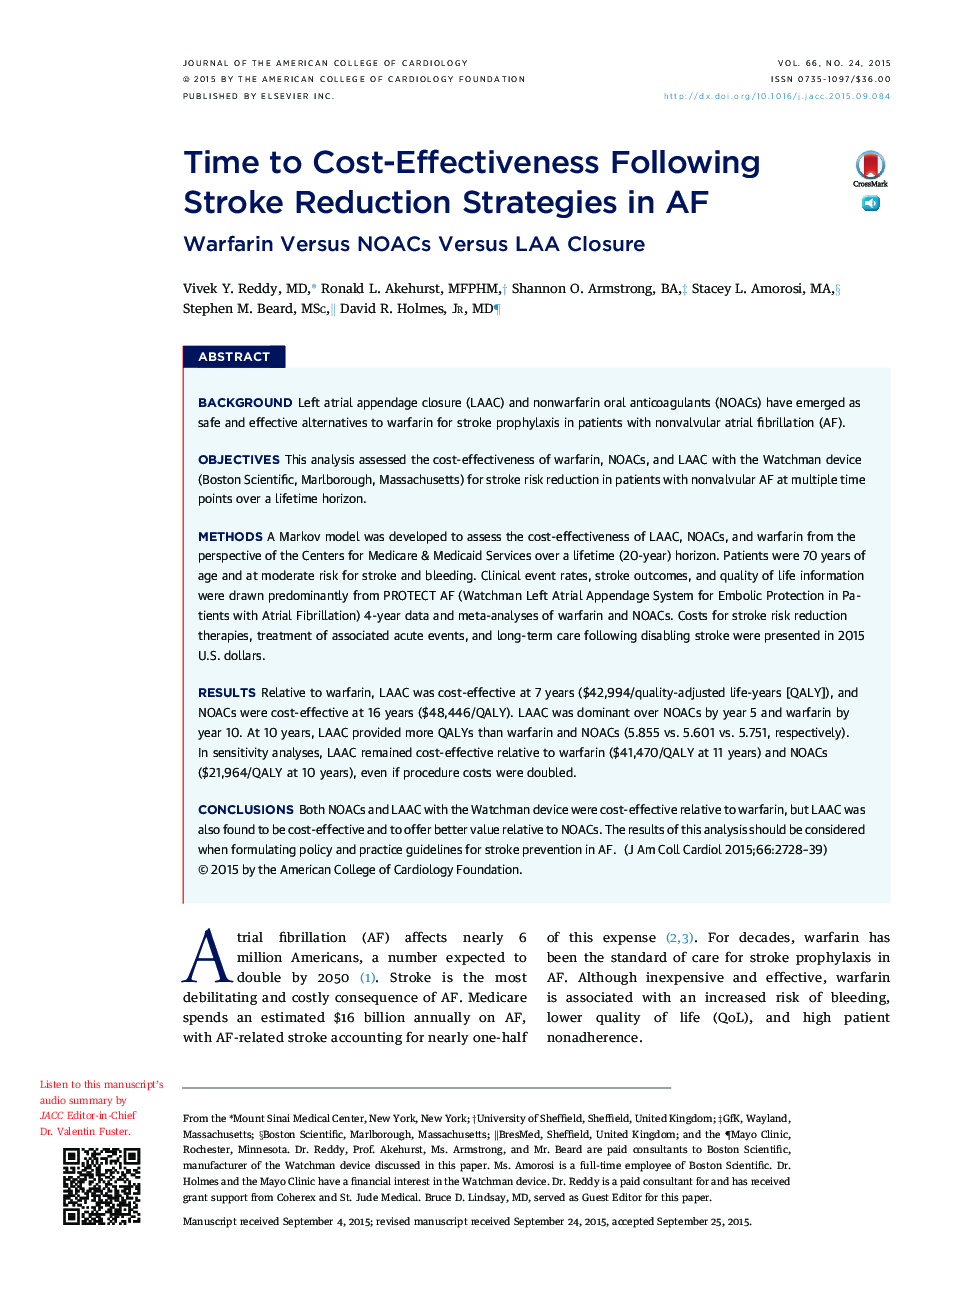 Time to Cost-Effectiveness Following Stroke Reduction Strategies in AF: Warfarin Versus NOACs Versus LAA Closure